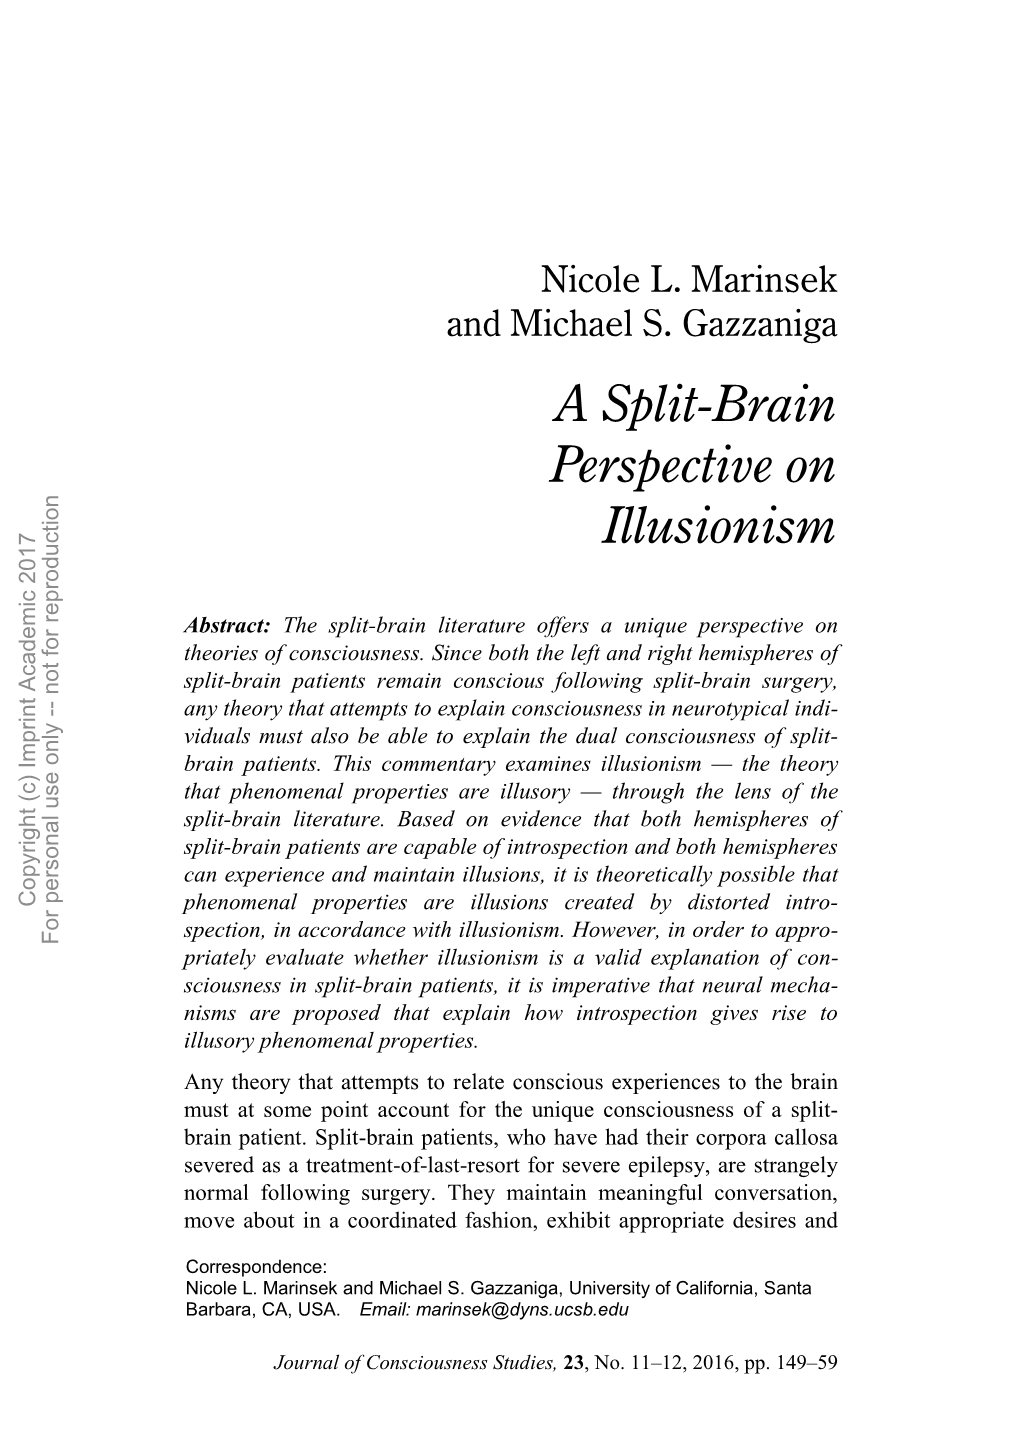 A Split-Brain Perspective on Illusionism